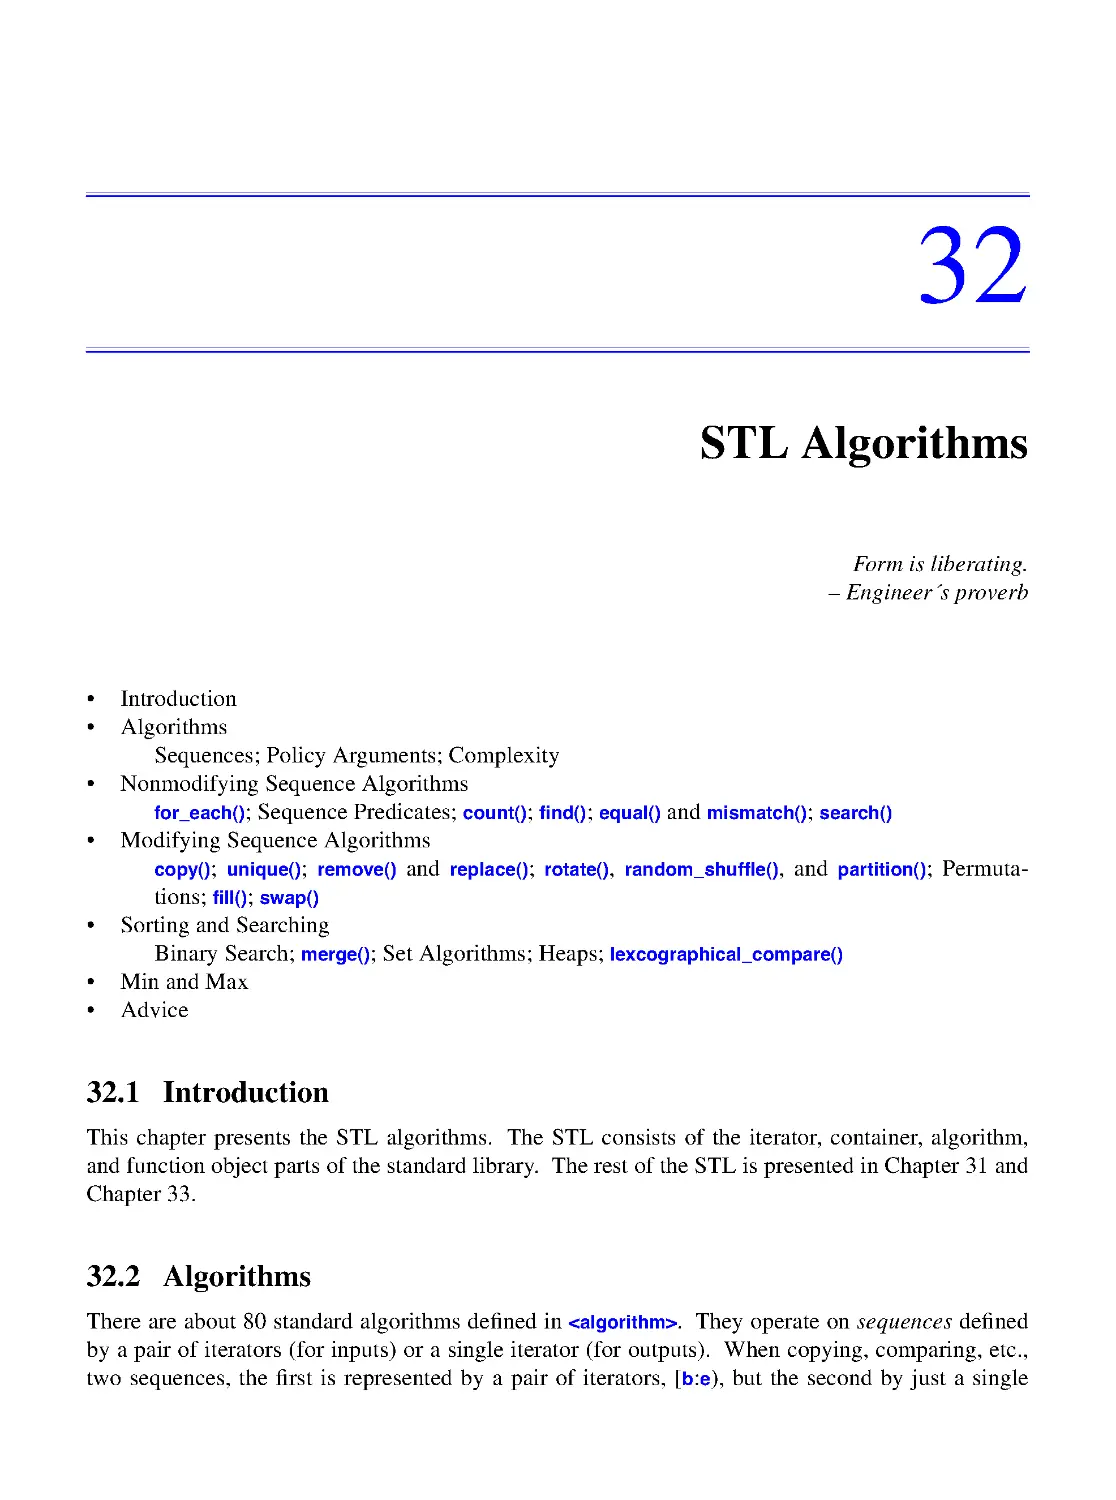 32. STL Algorithms